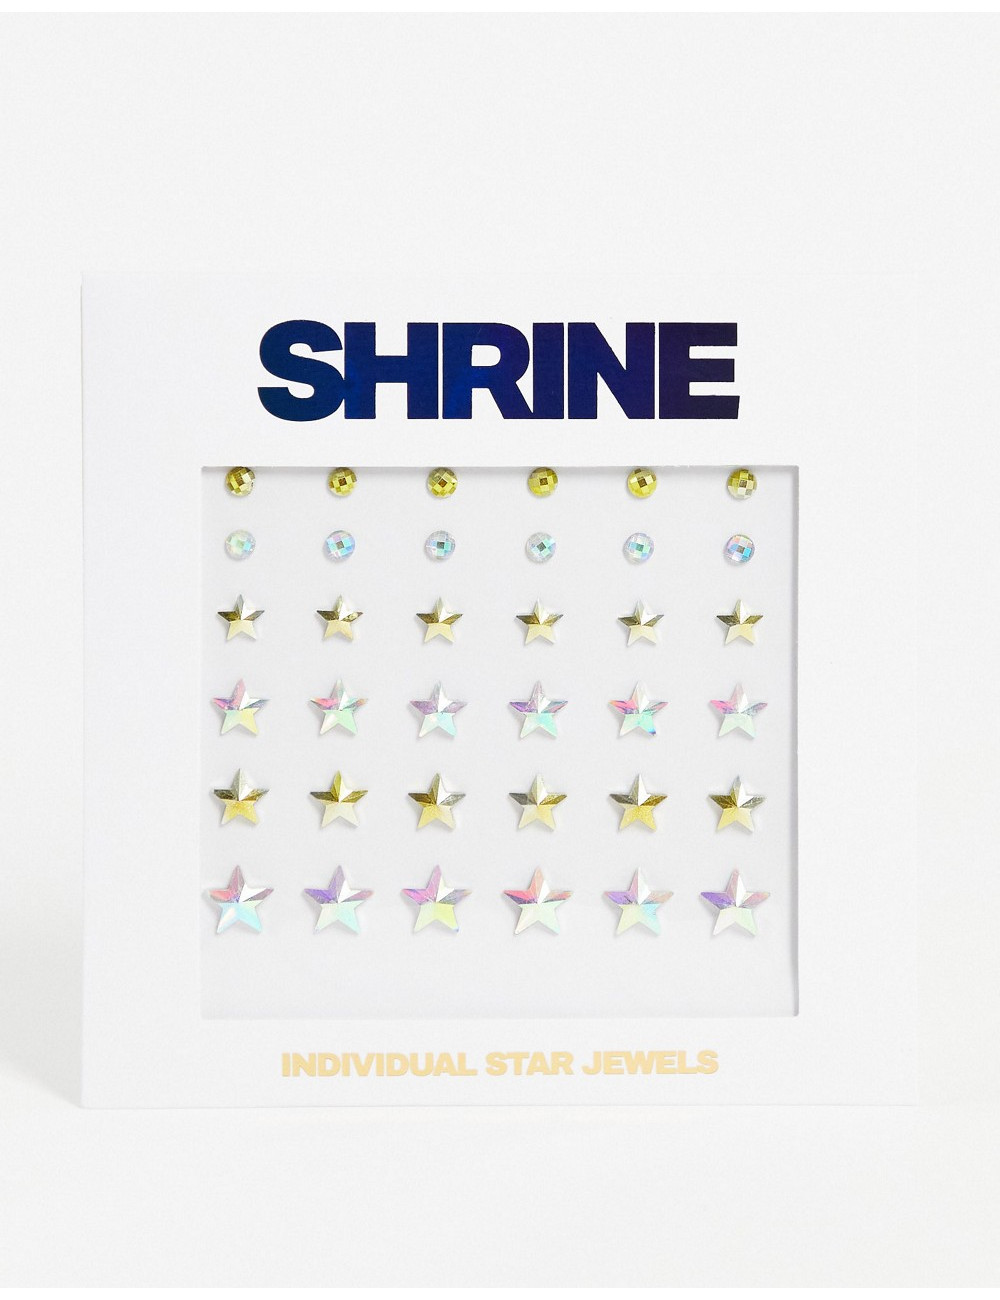 Shrine Individual Star Jewels